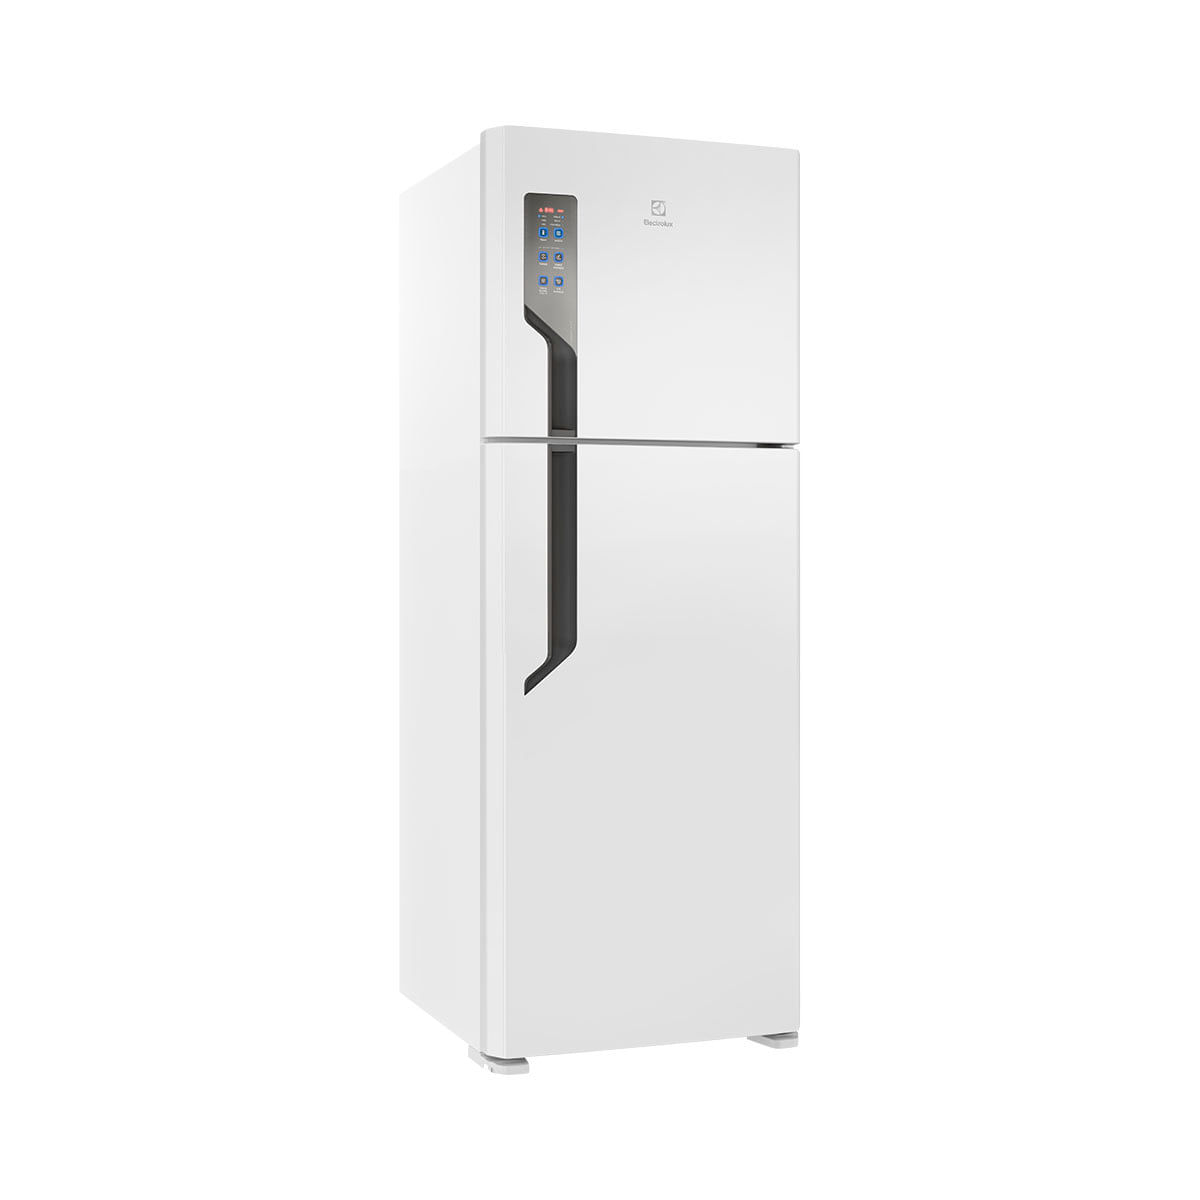 Geladeira Electrolux Frost Free Top Freezer 2 Portas Tf56 474 Litros Branca 220V